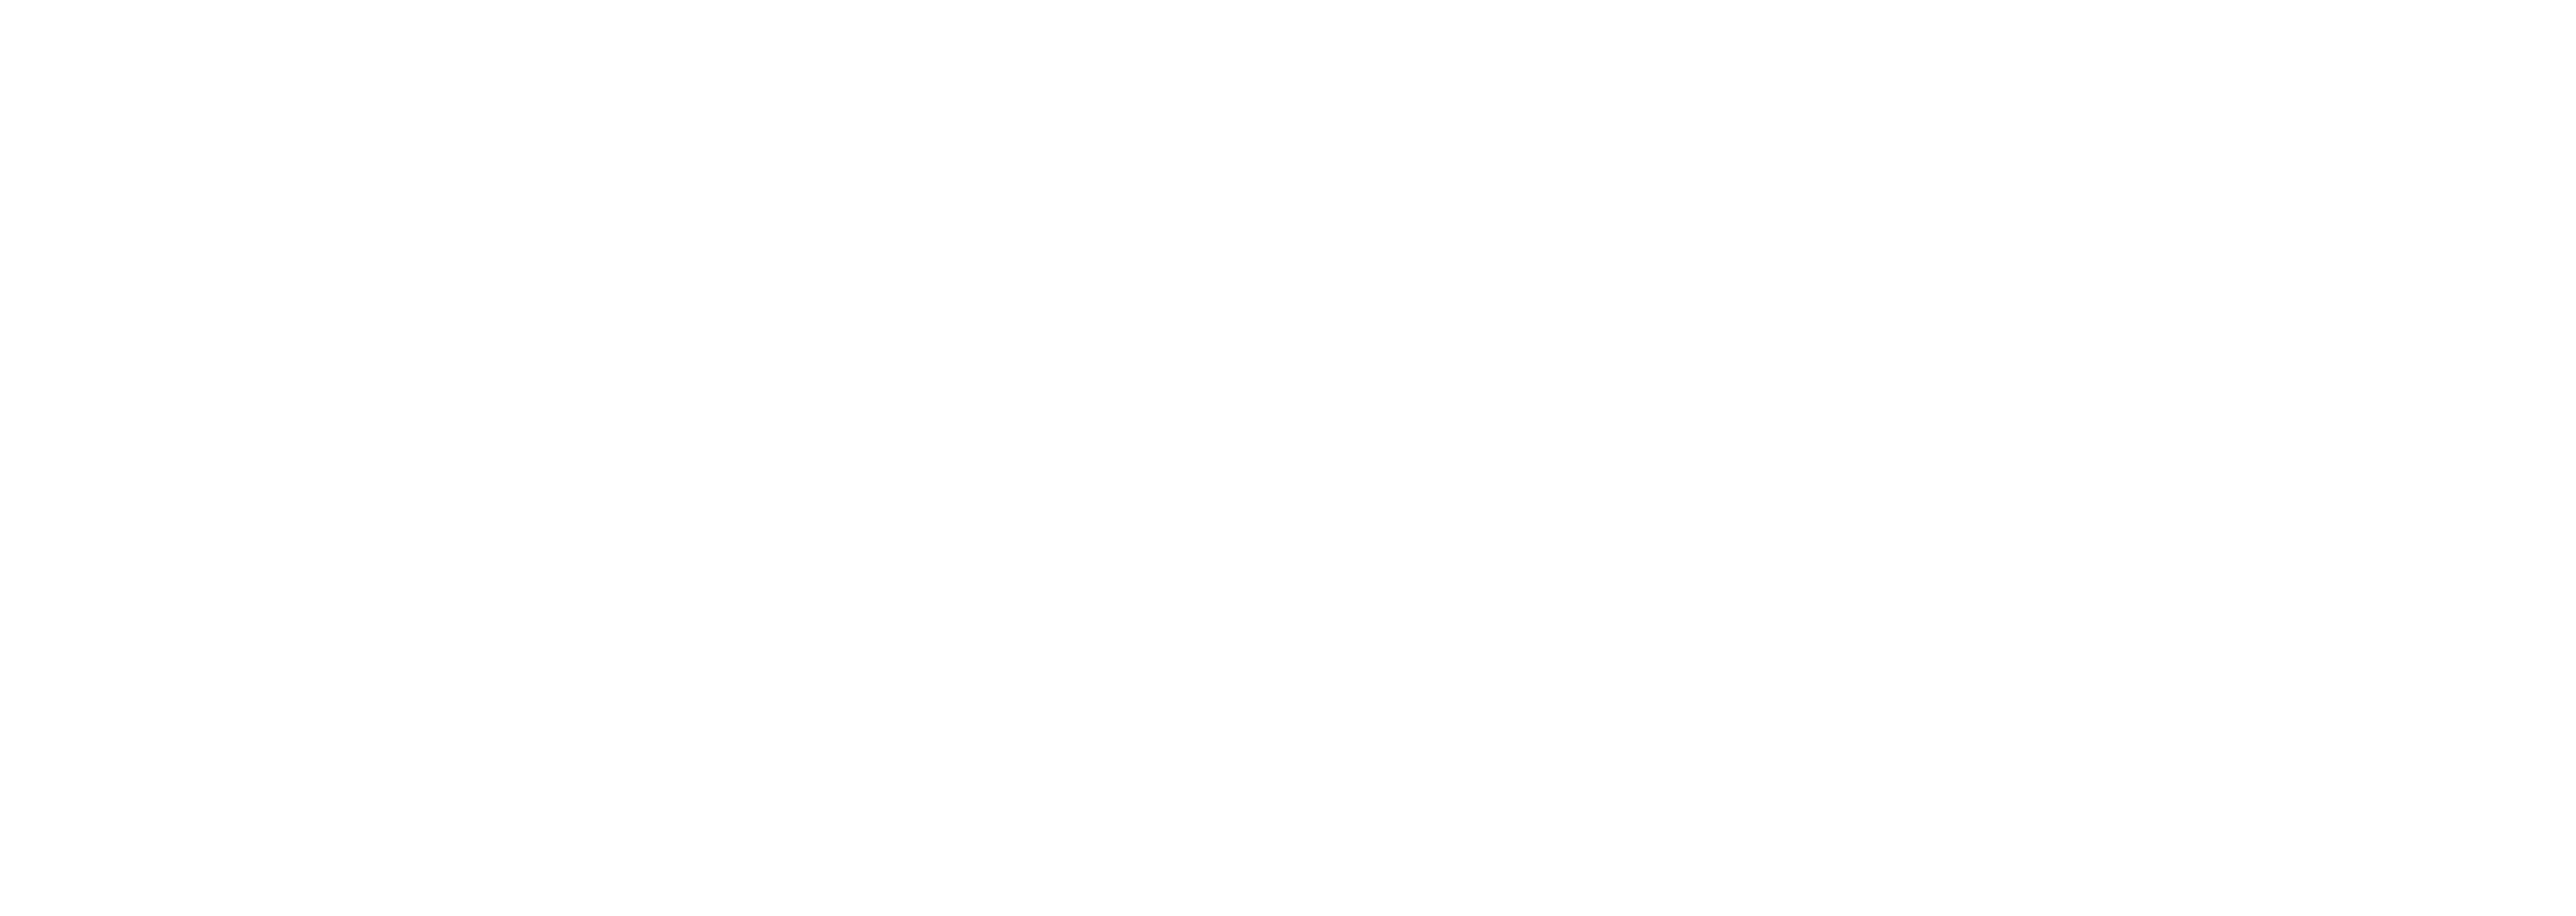 Inside Pixar logo